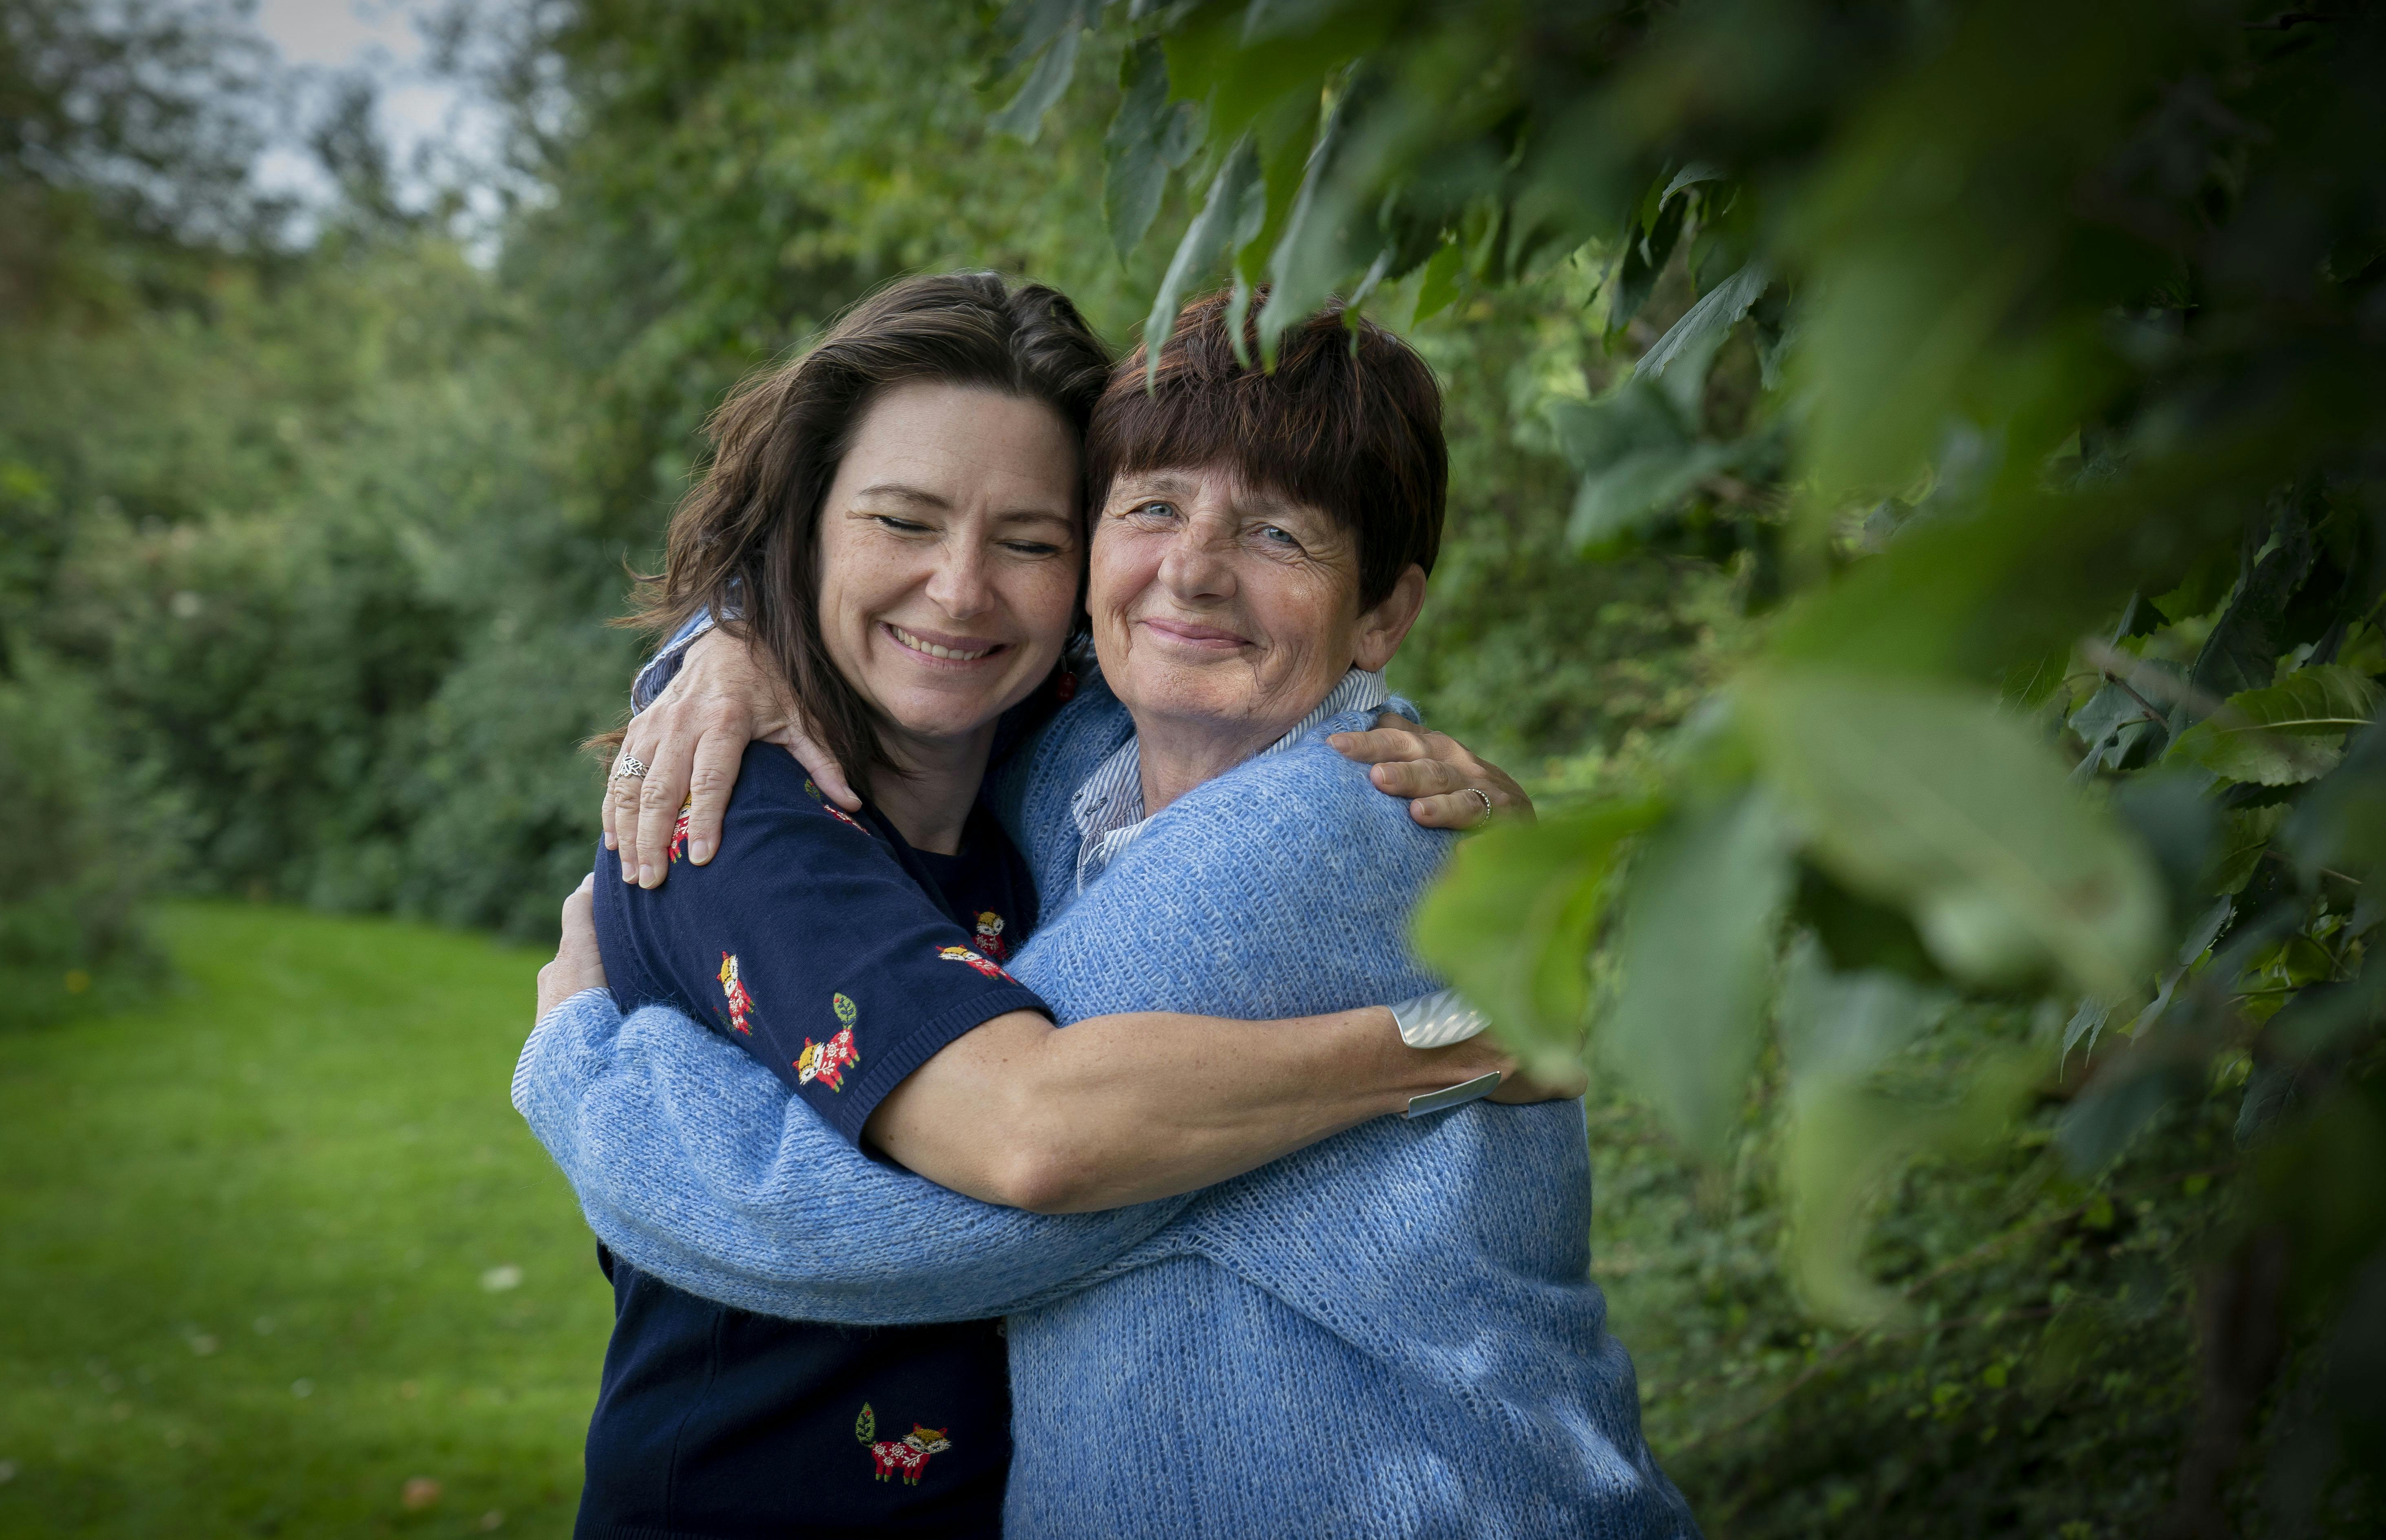 Stinemaria og hendes mor krammer ved en busk